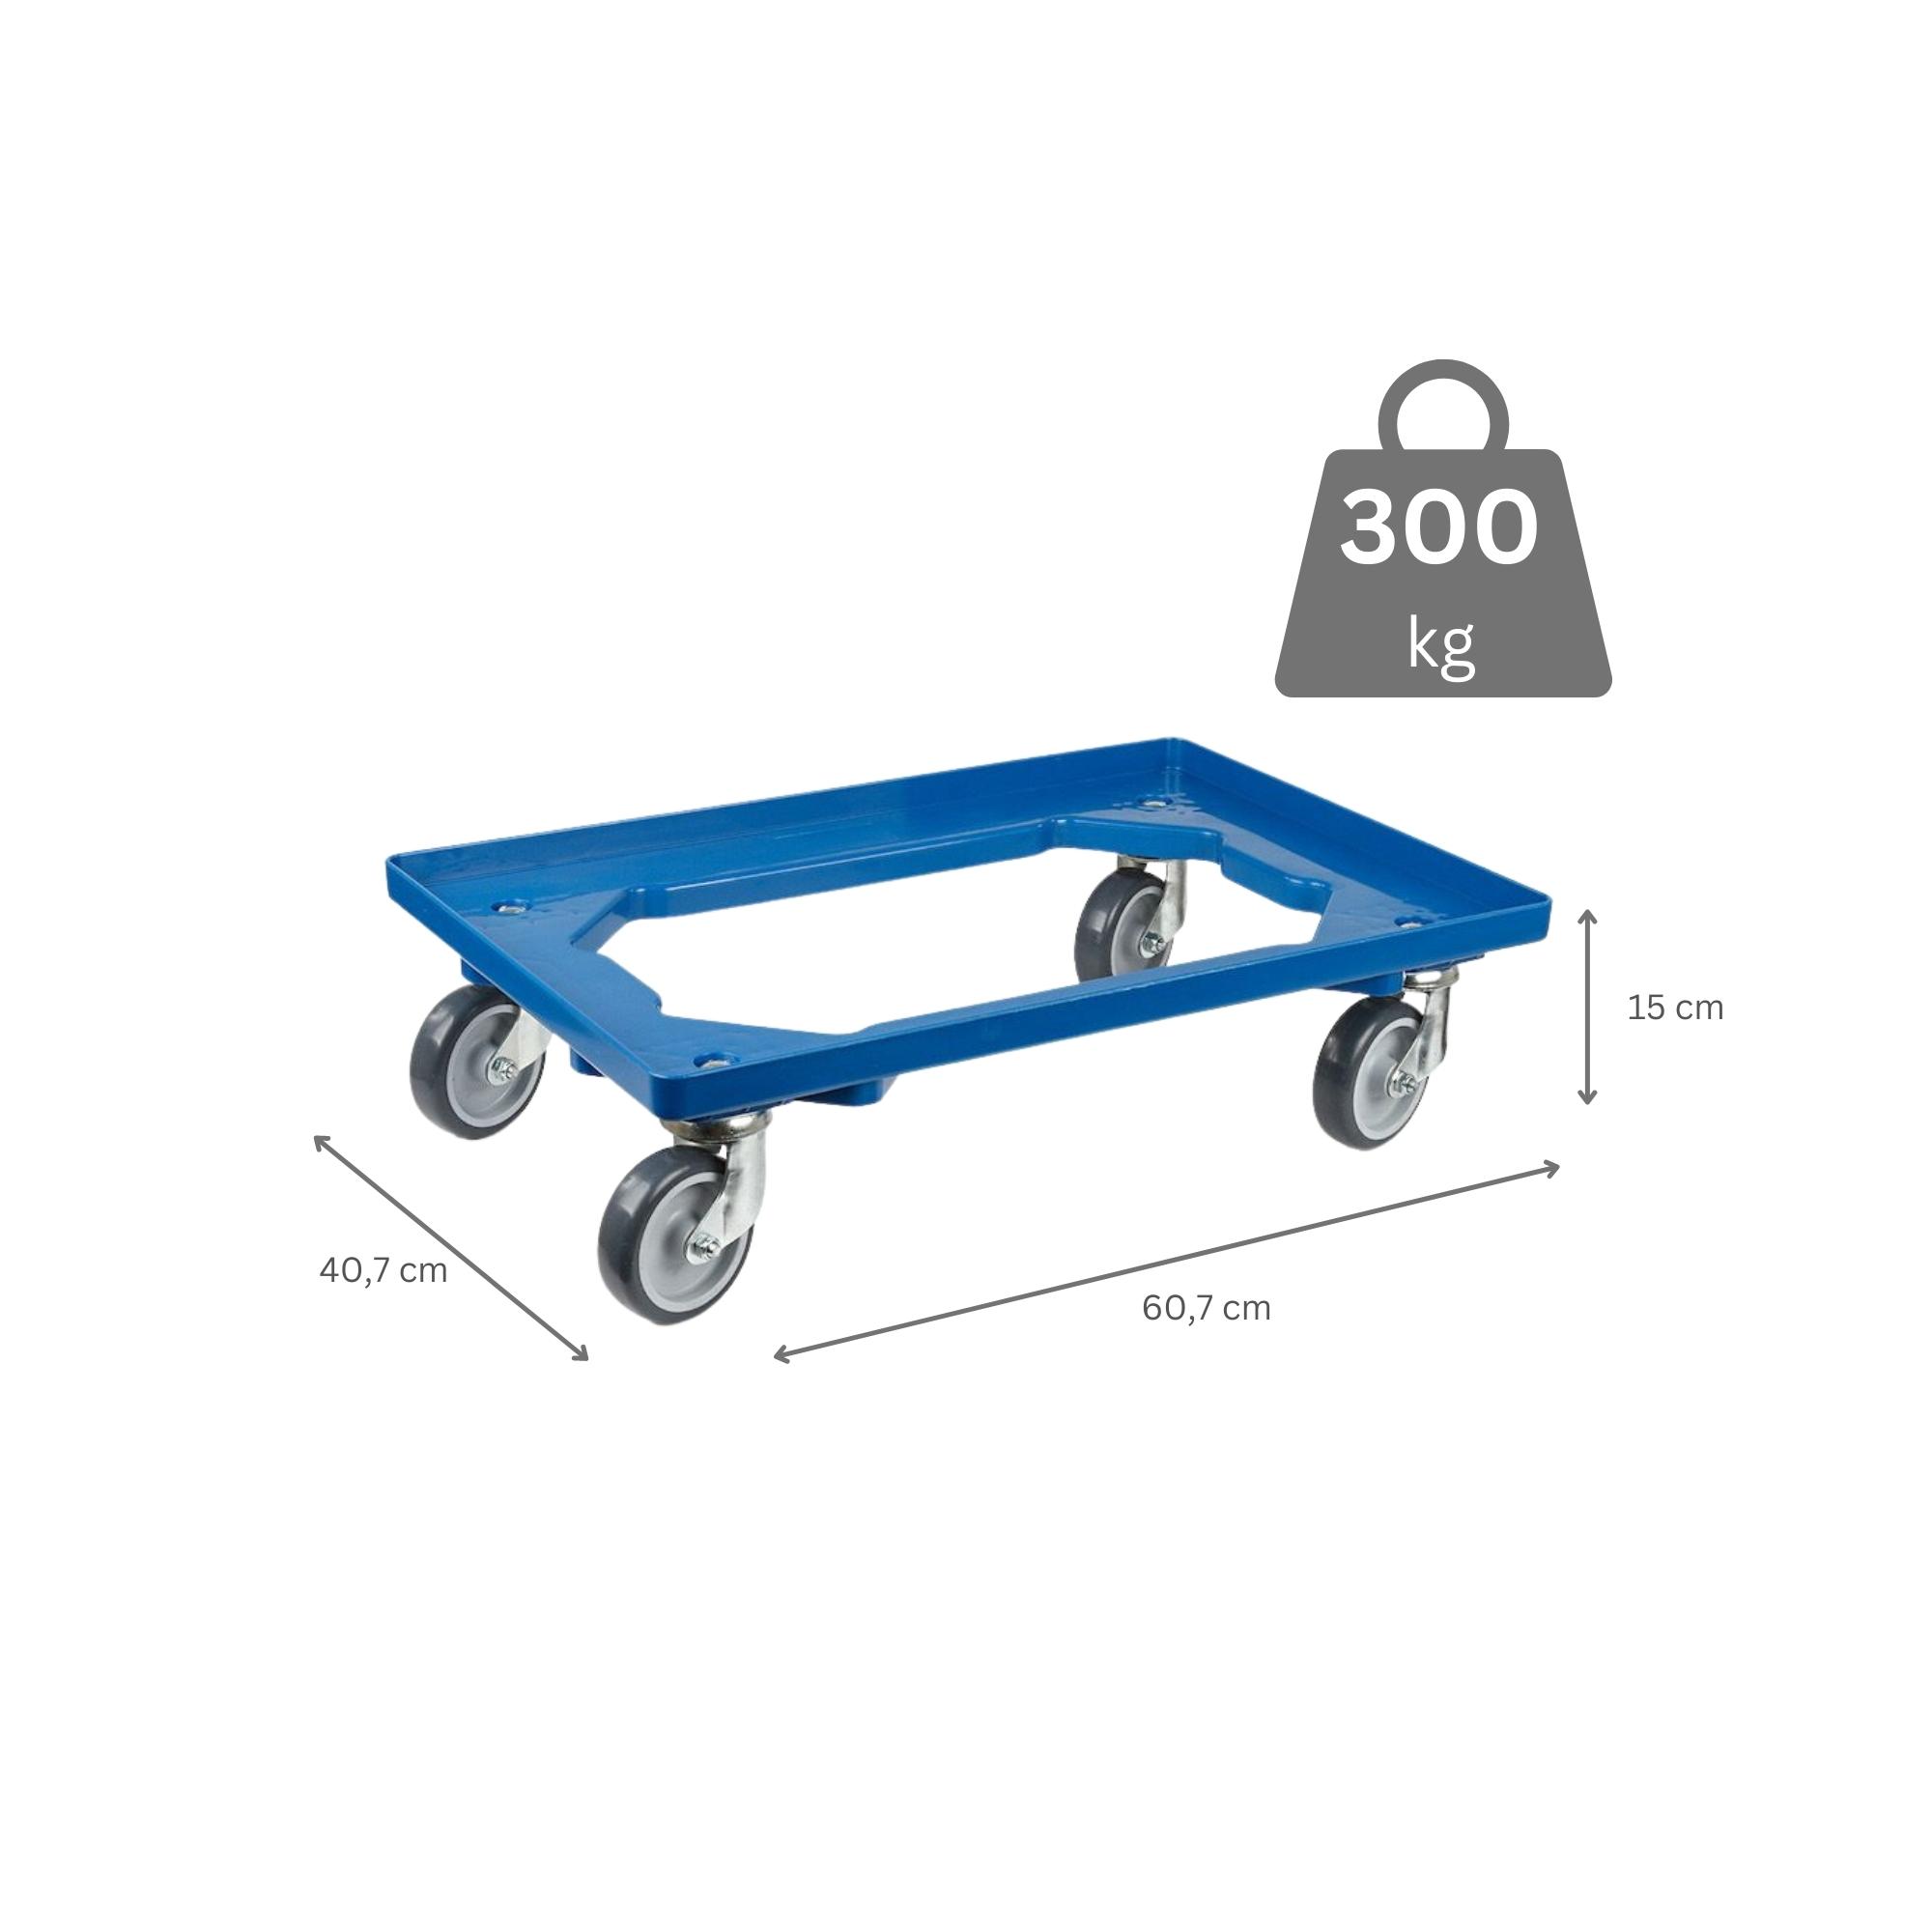 SparSet 6x Transportroller für Euroboxen 60x40cm mit Gummiräder blau | Offenes Deck | 2 Lenkrollen & 2 Bremsrollen | Traglast 300kg | Kistenroller Logistikroller Rollwagen Profi-Fahrgestell